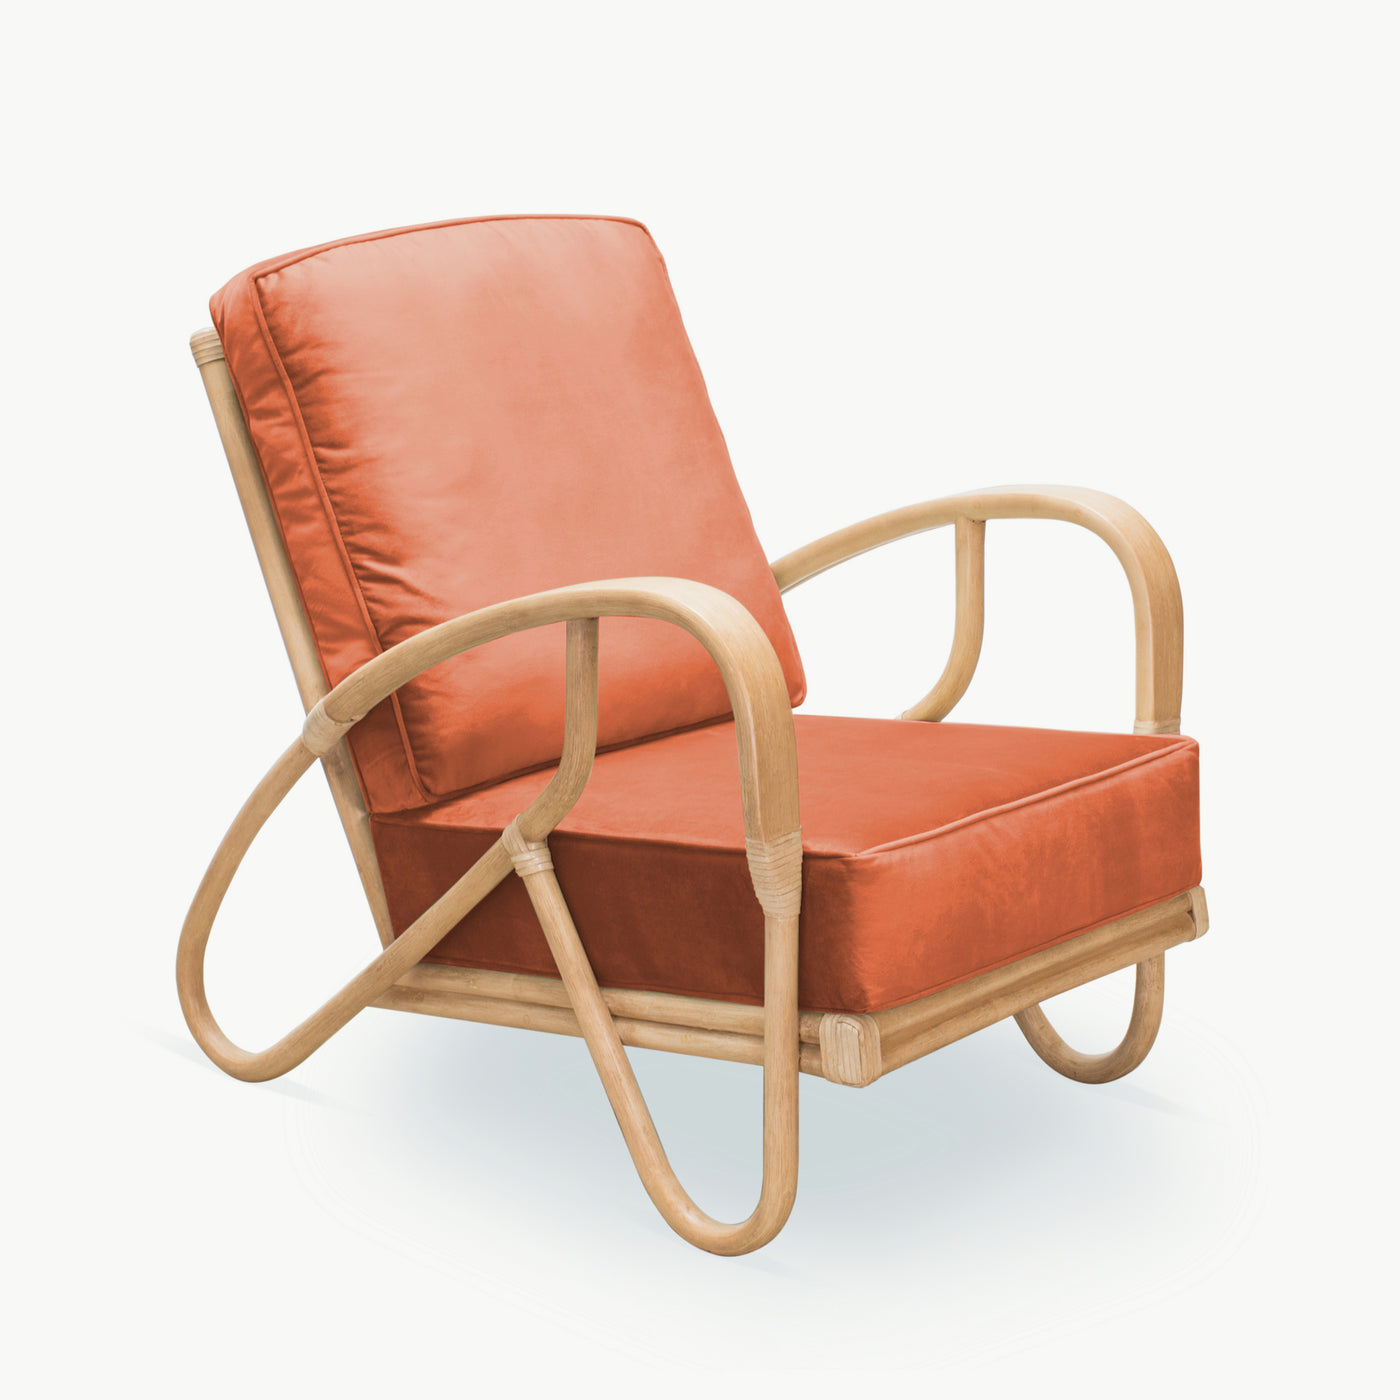 THE MAVERICK Cane Chair - Sienna